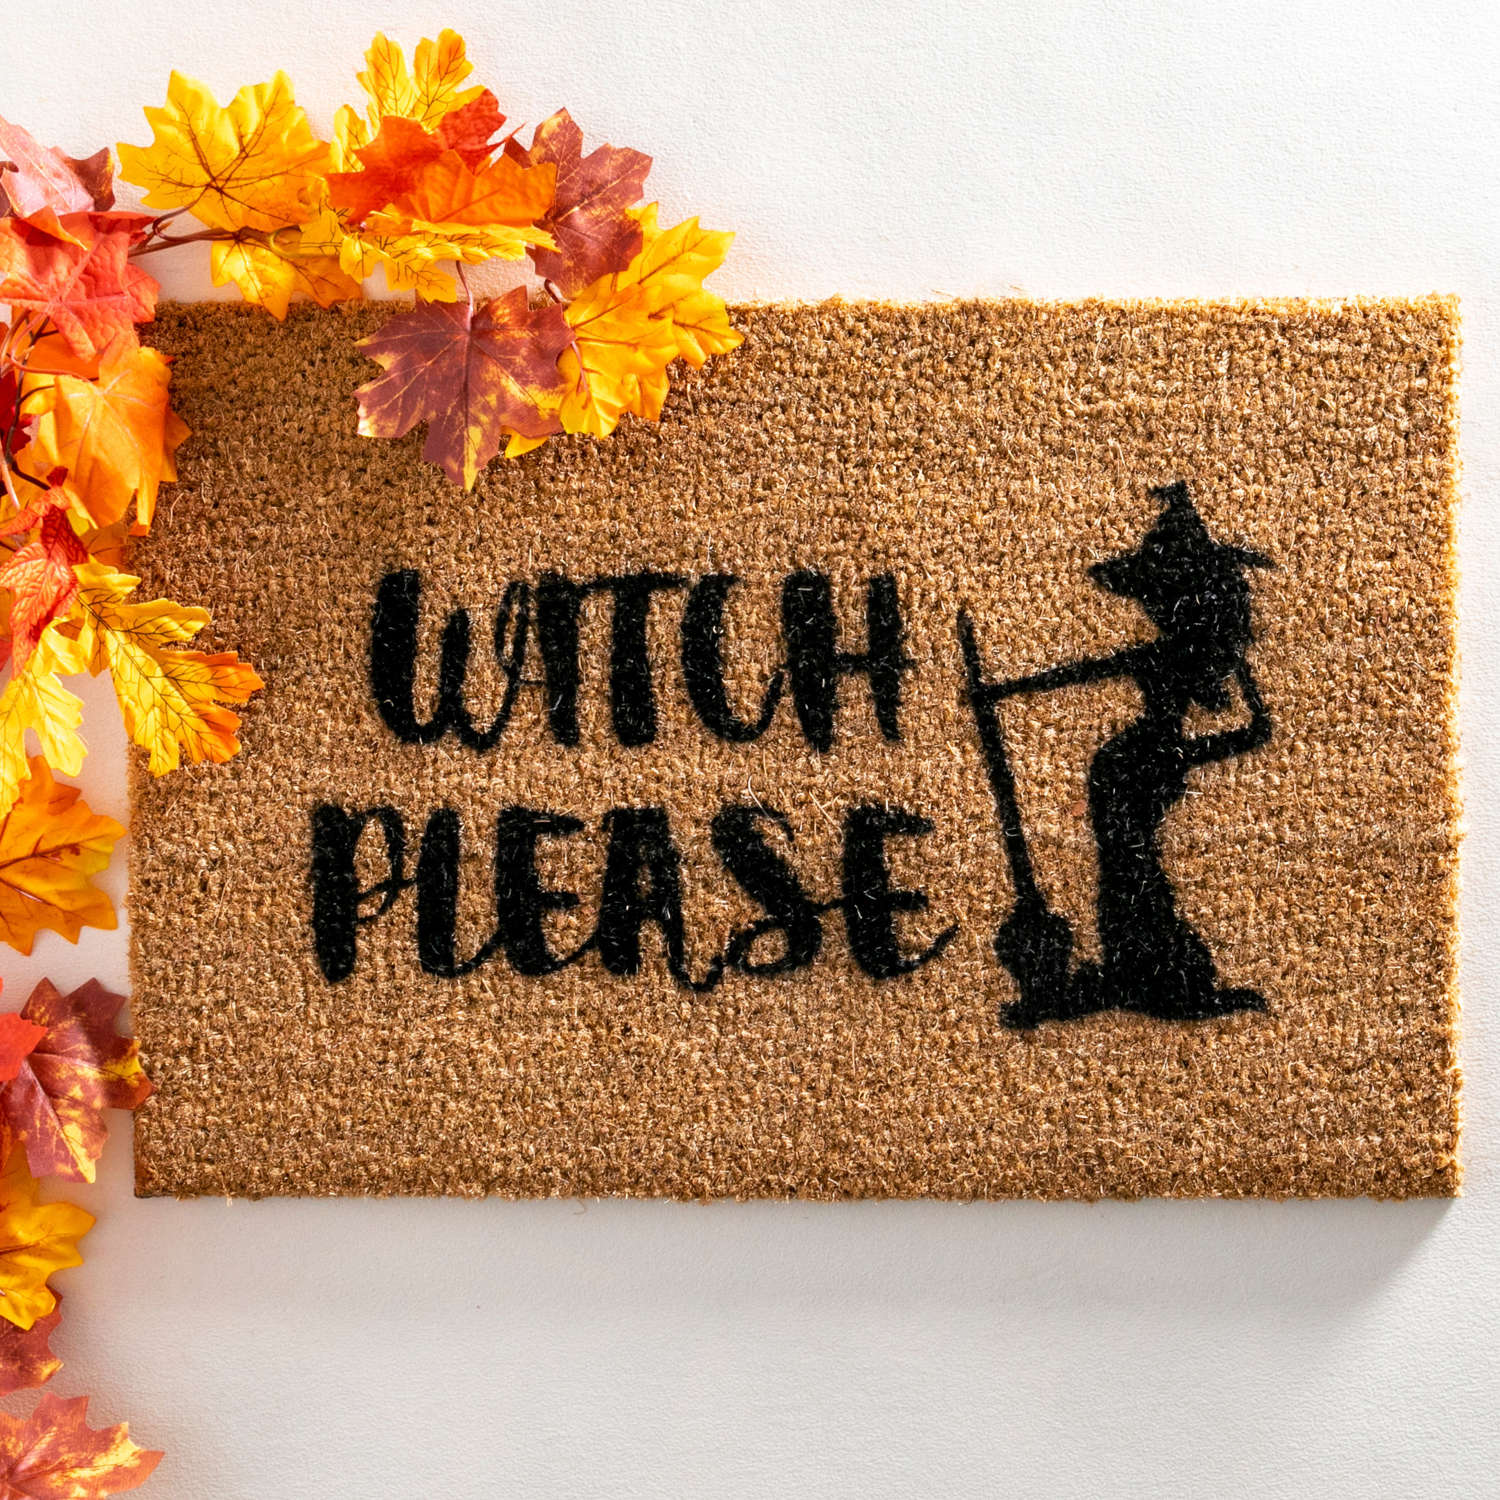 Witch please design standard size doormat